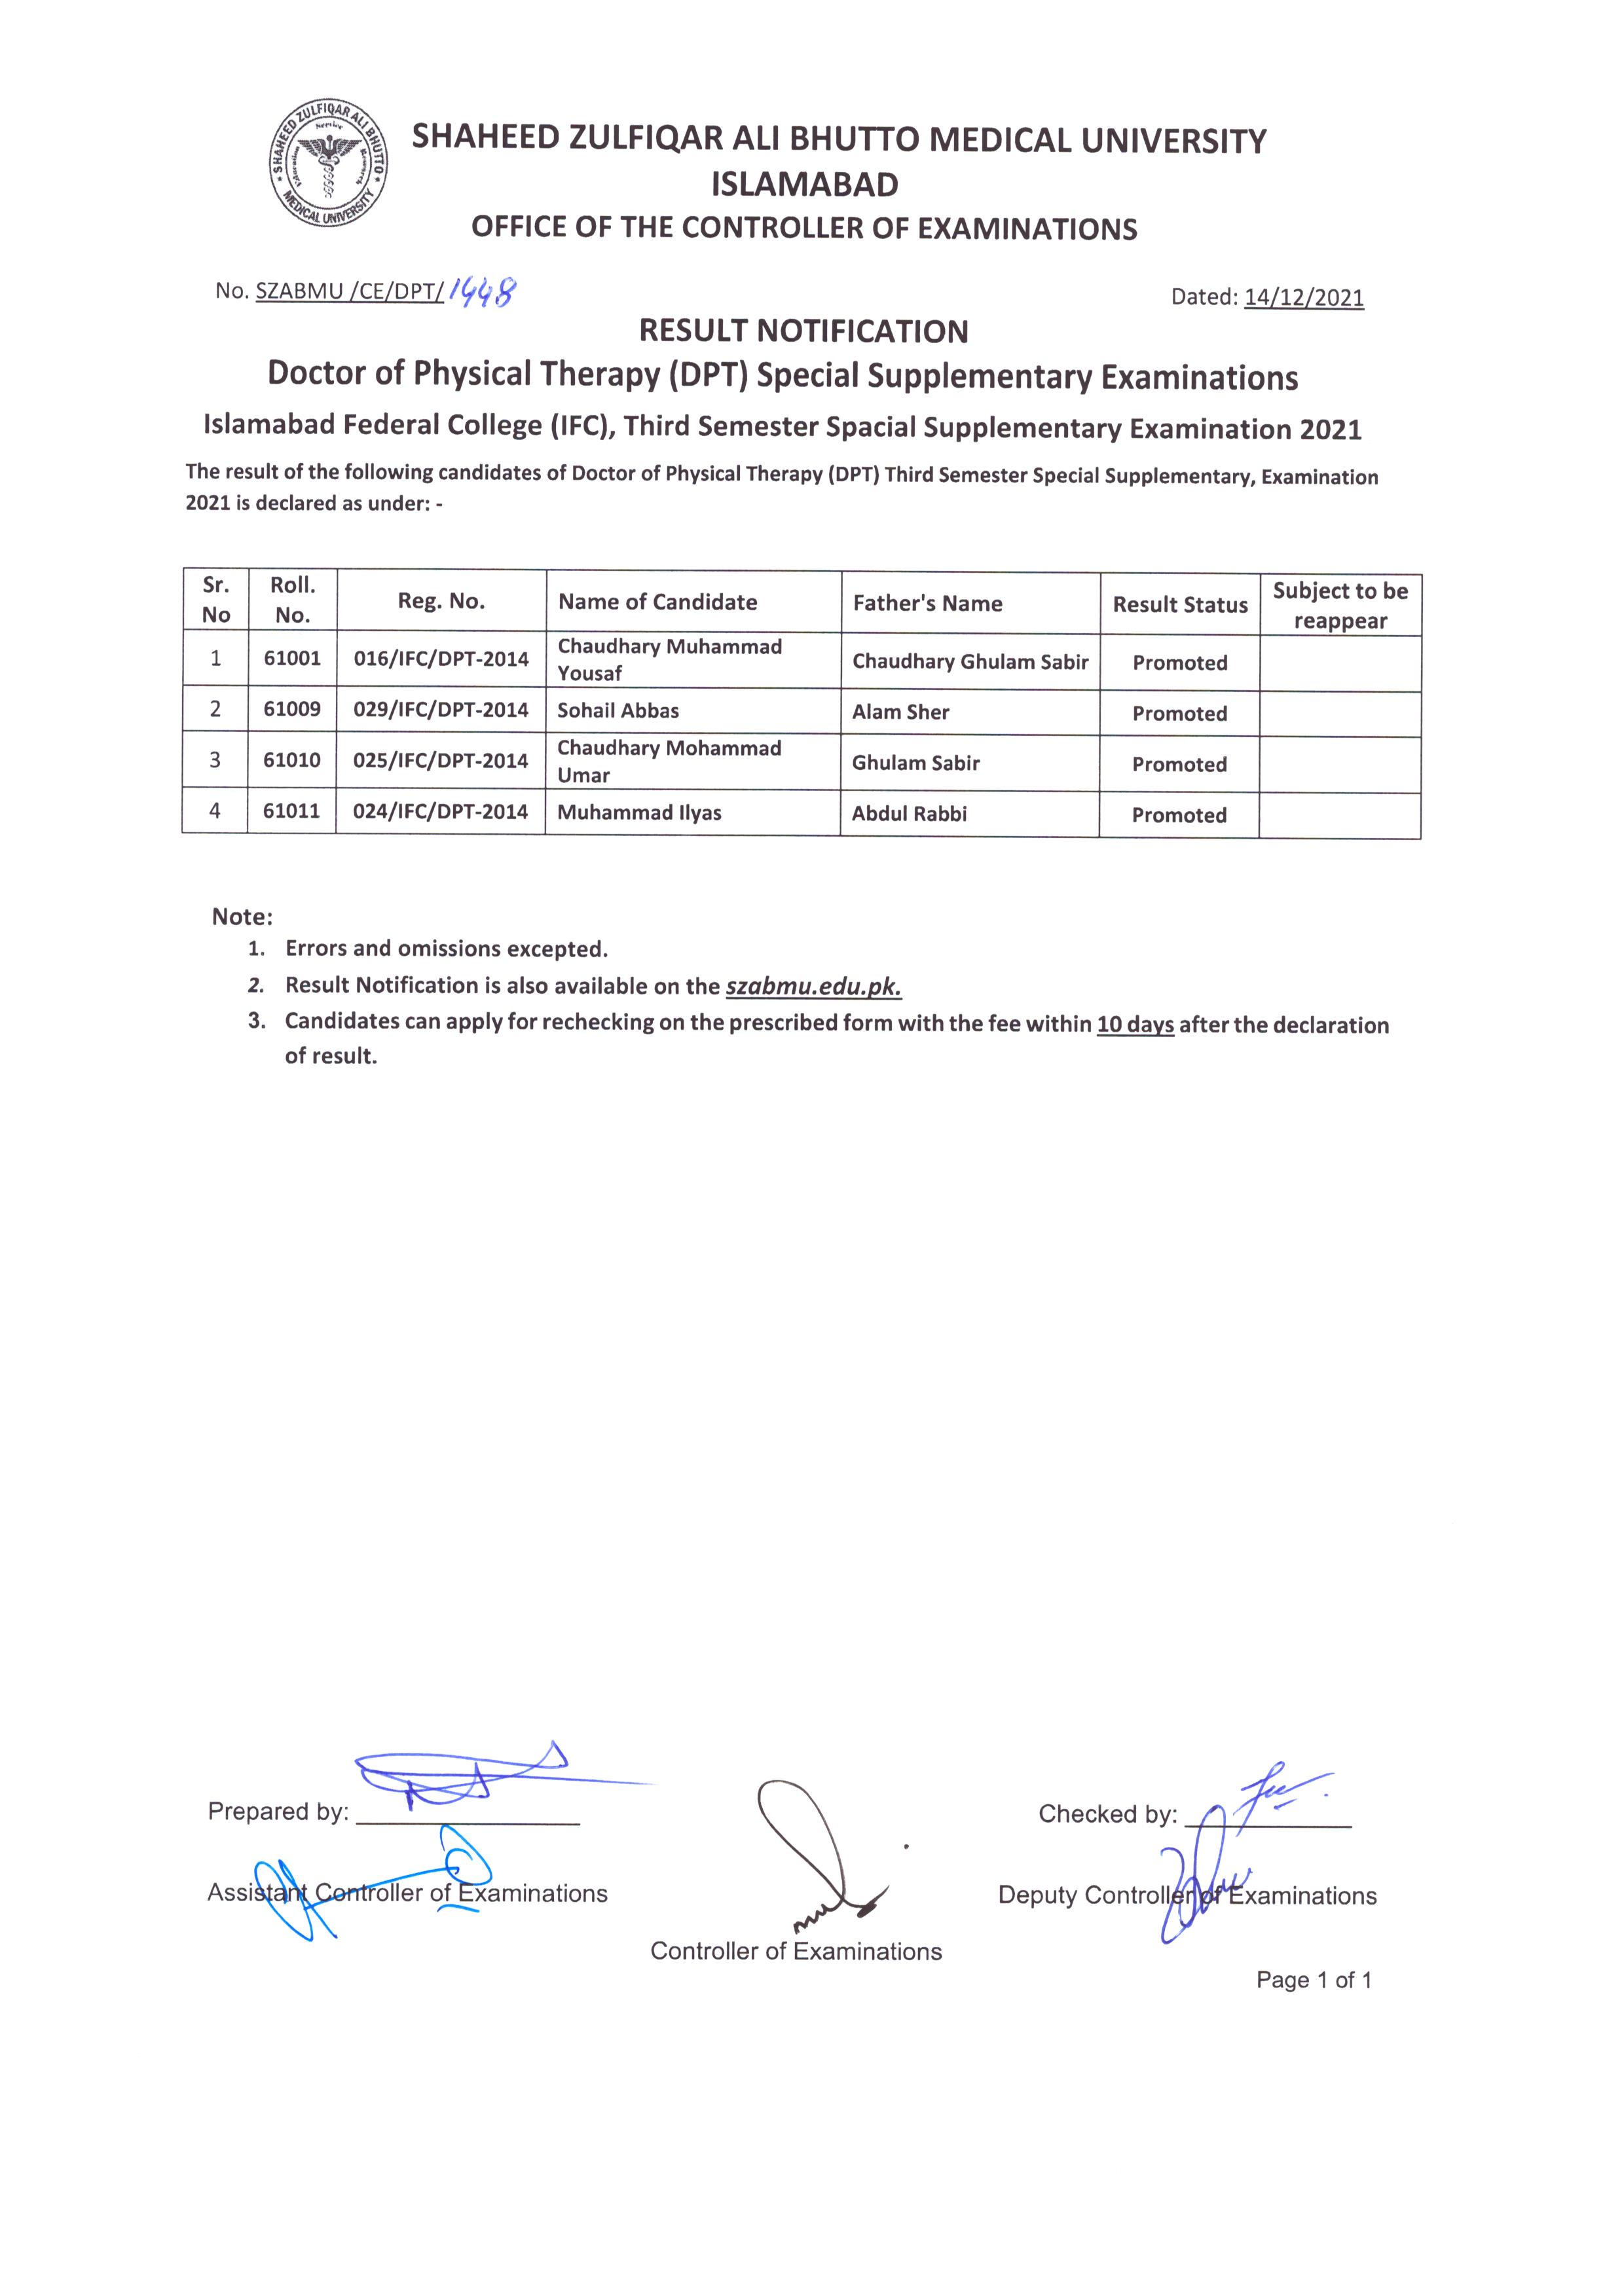 Result Notification of DPT Special Supplementary Examinations